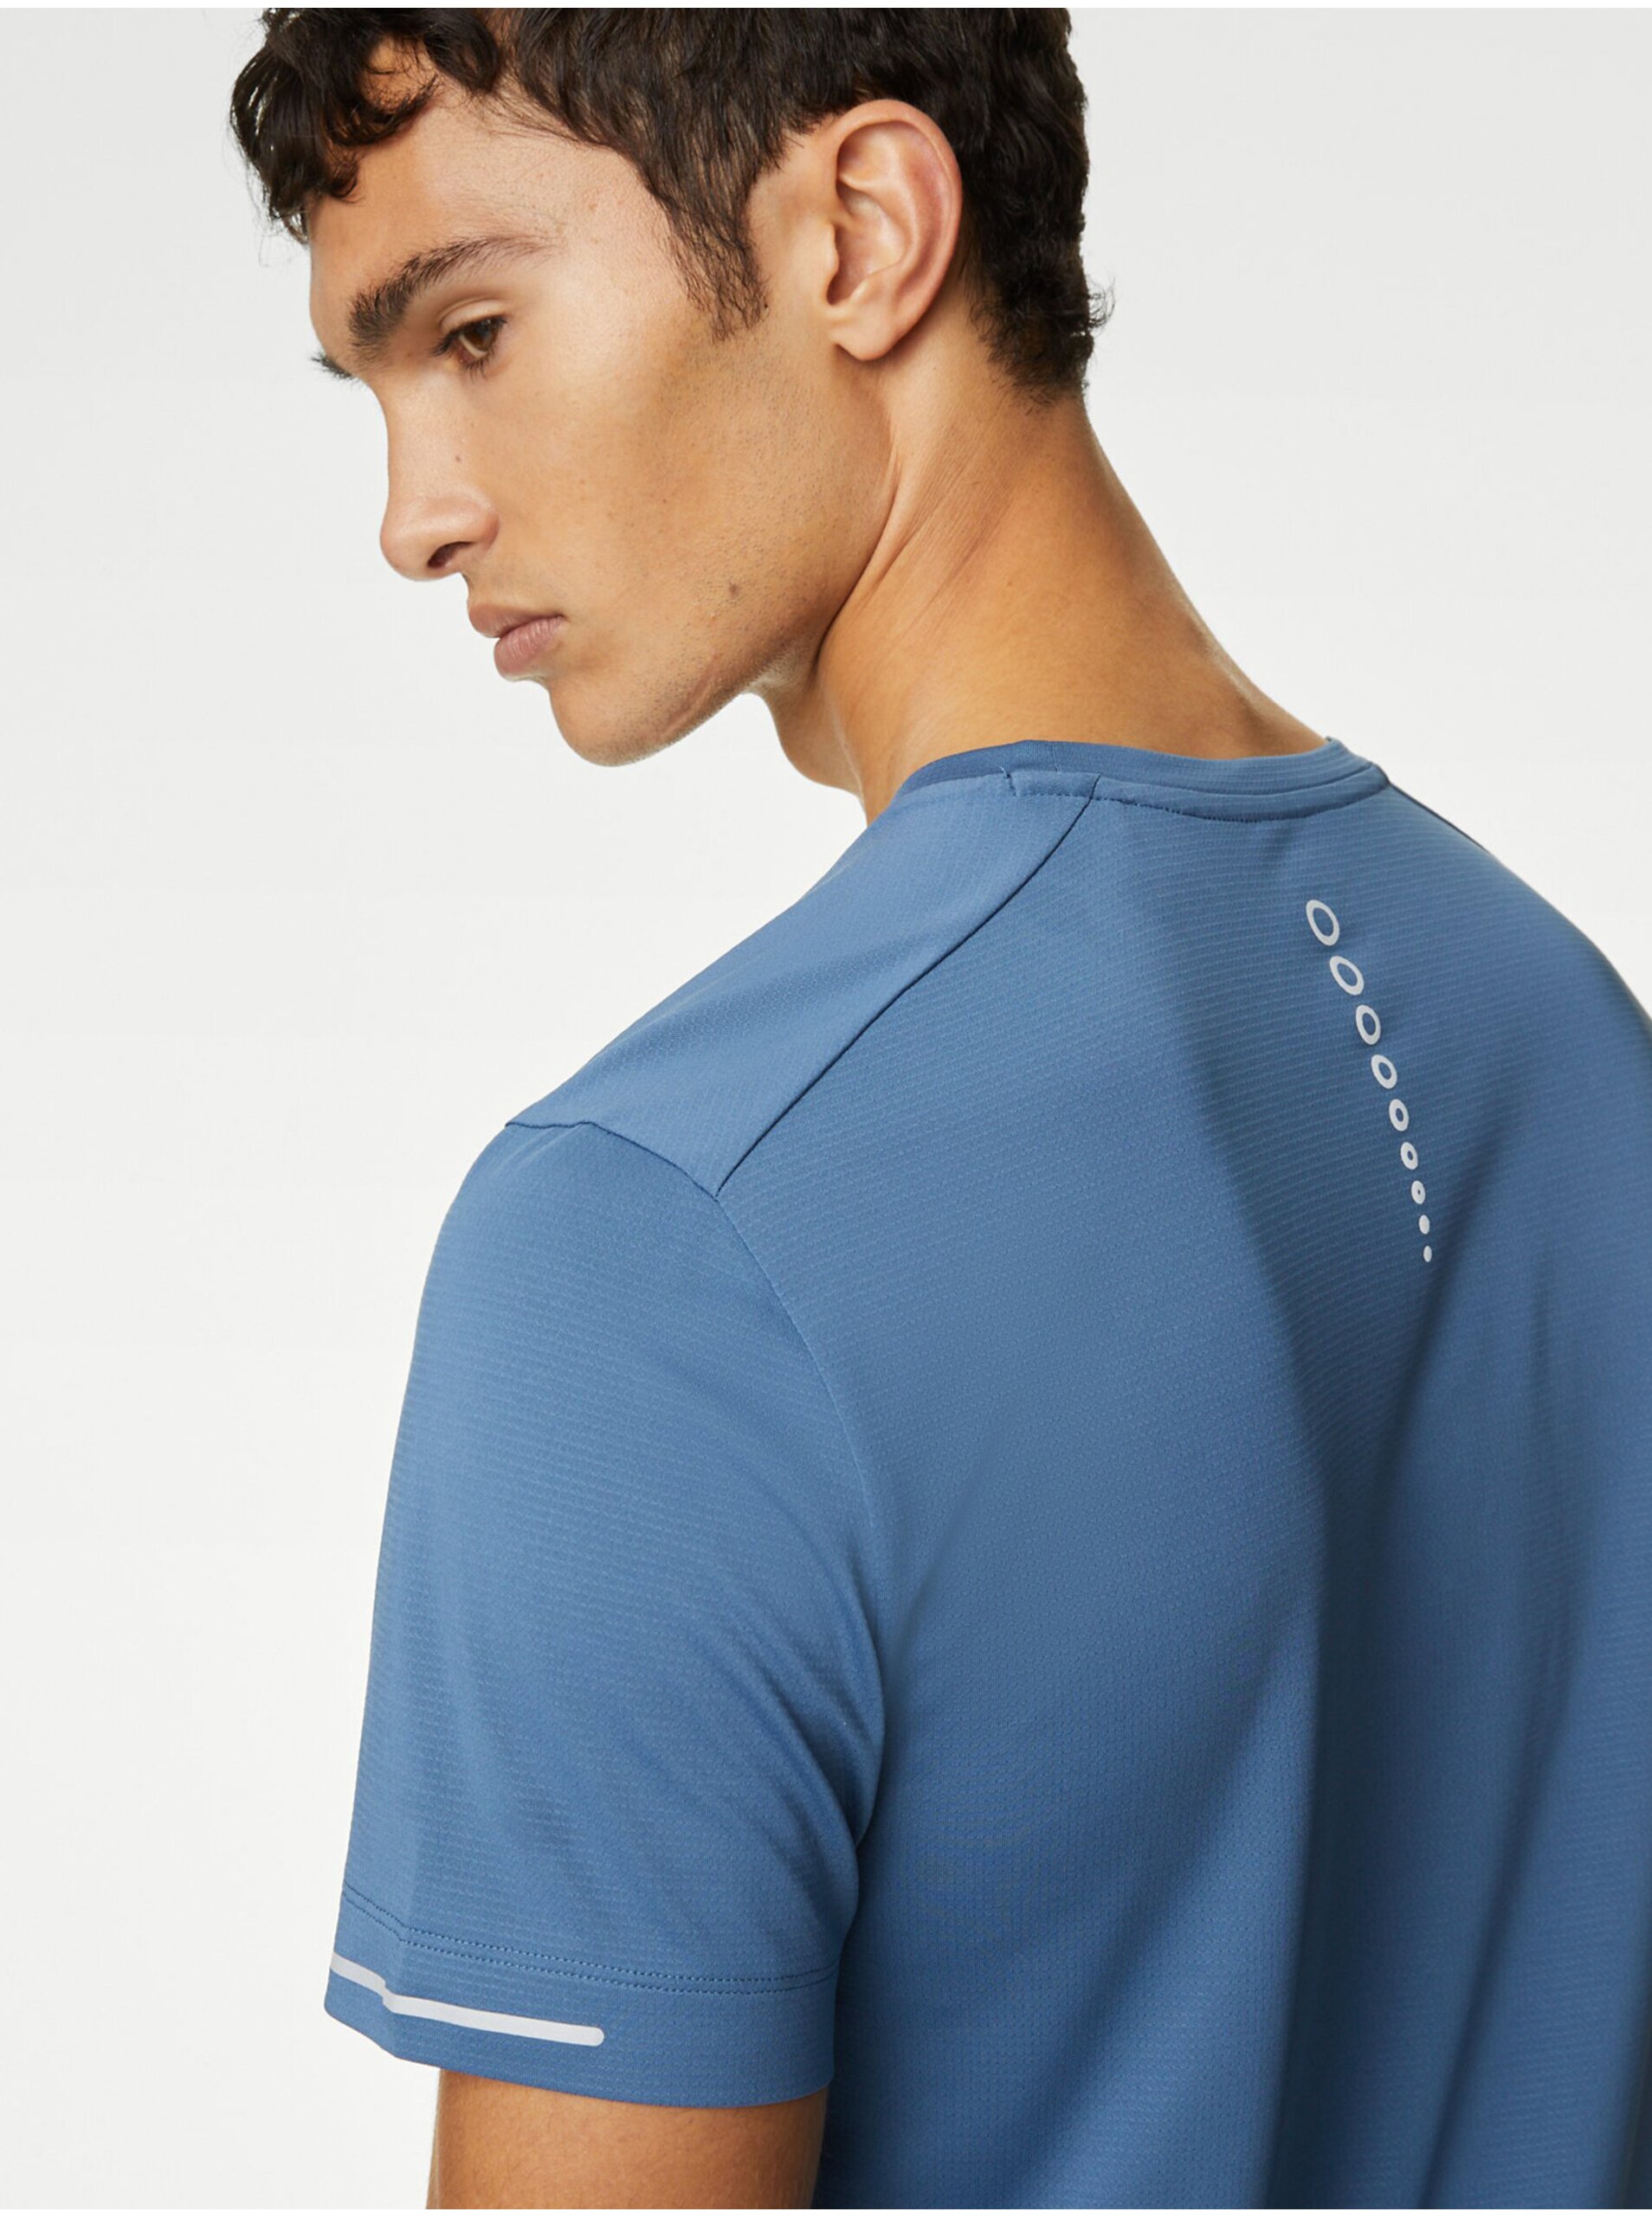 Lacno Modré pánske športové tričko Marks & Spencer